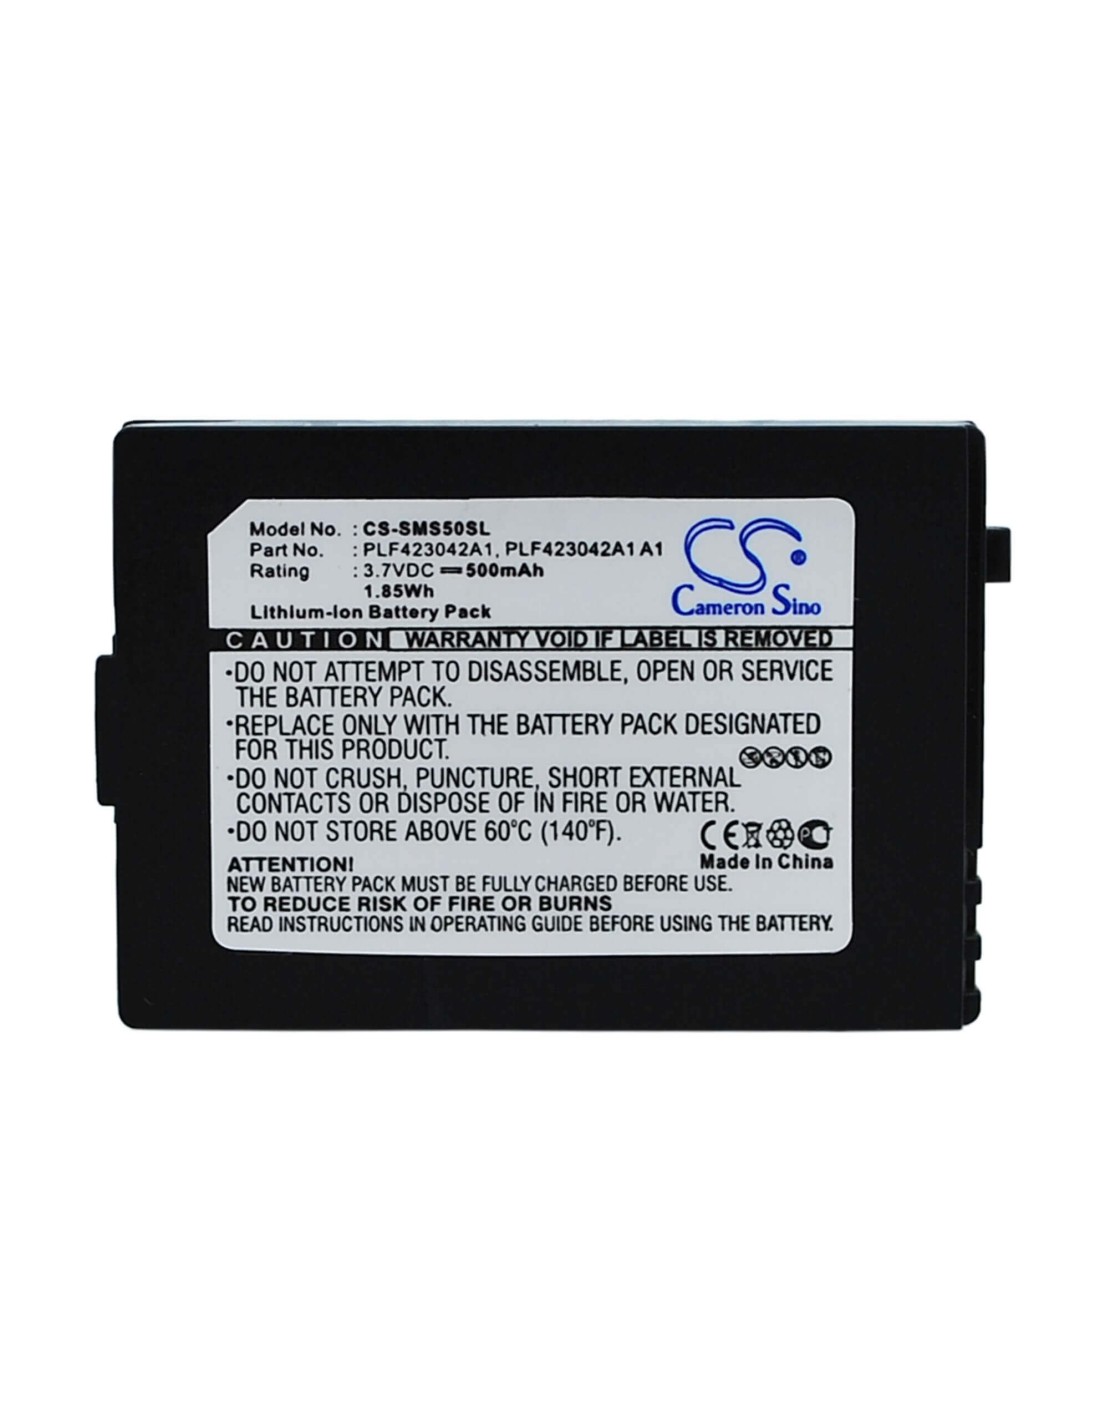 Battery for Sirius S50, S50sb1 3.7V, 500mAh - 1.85Wh